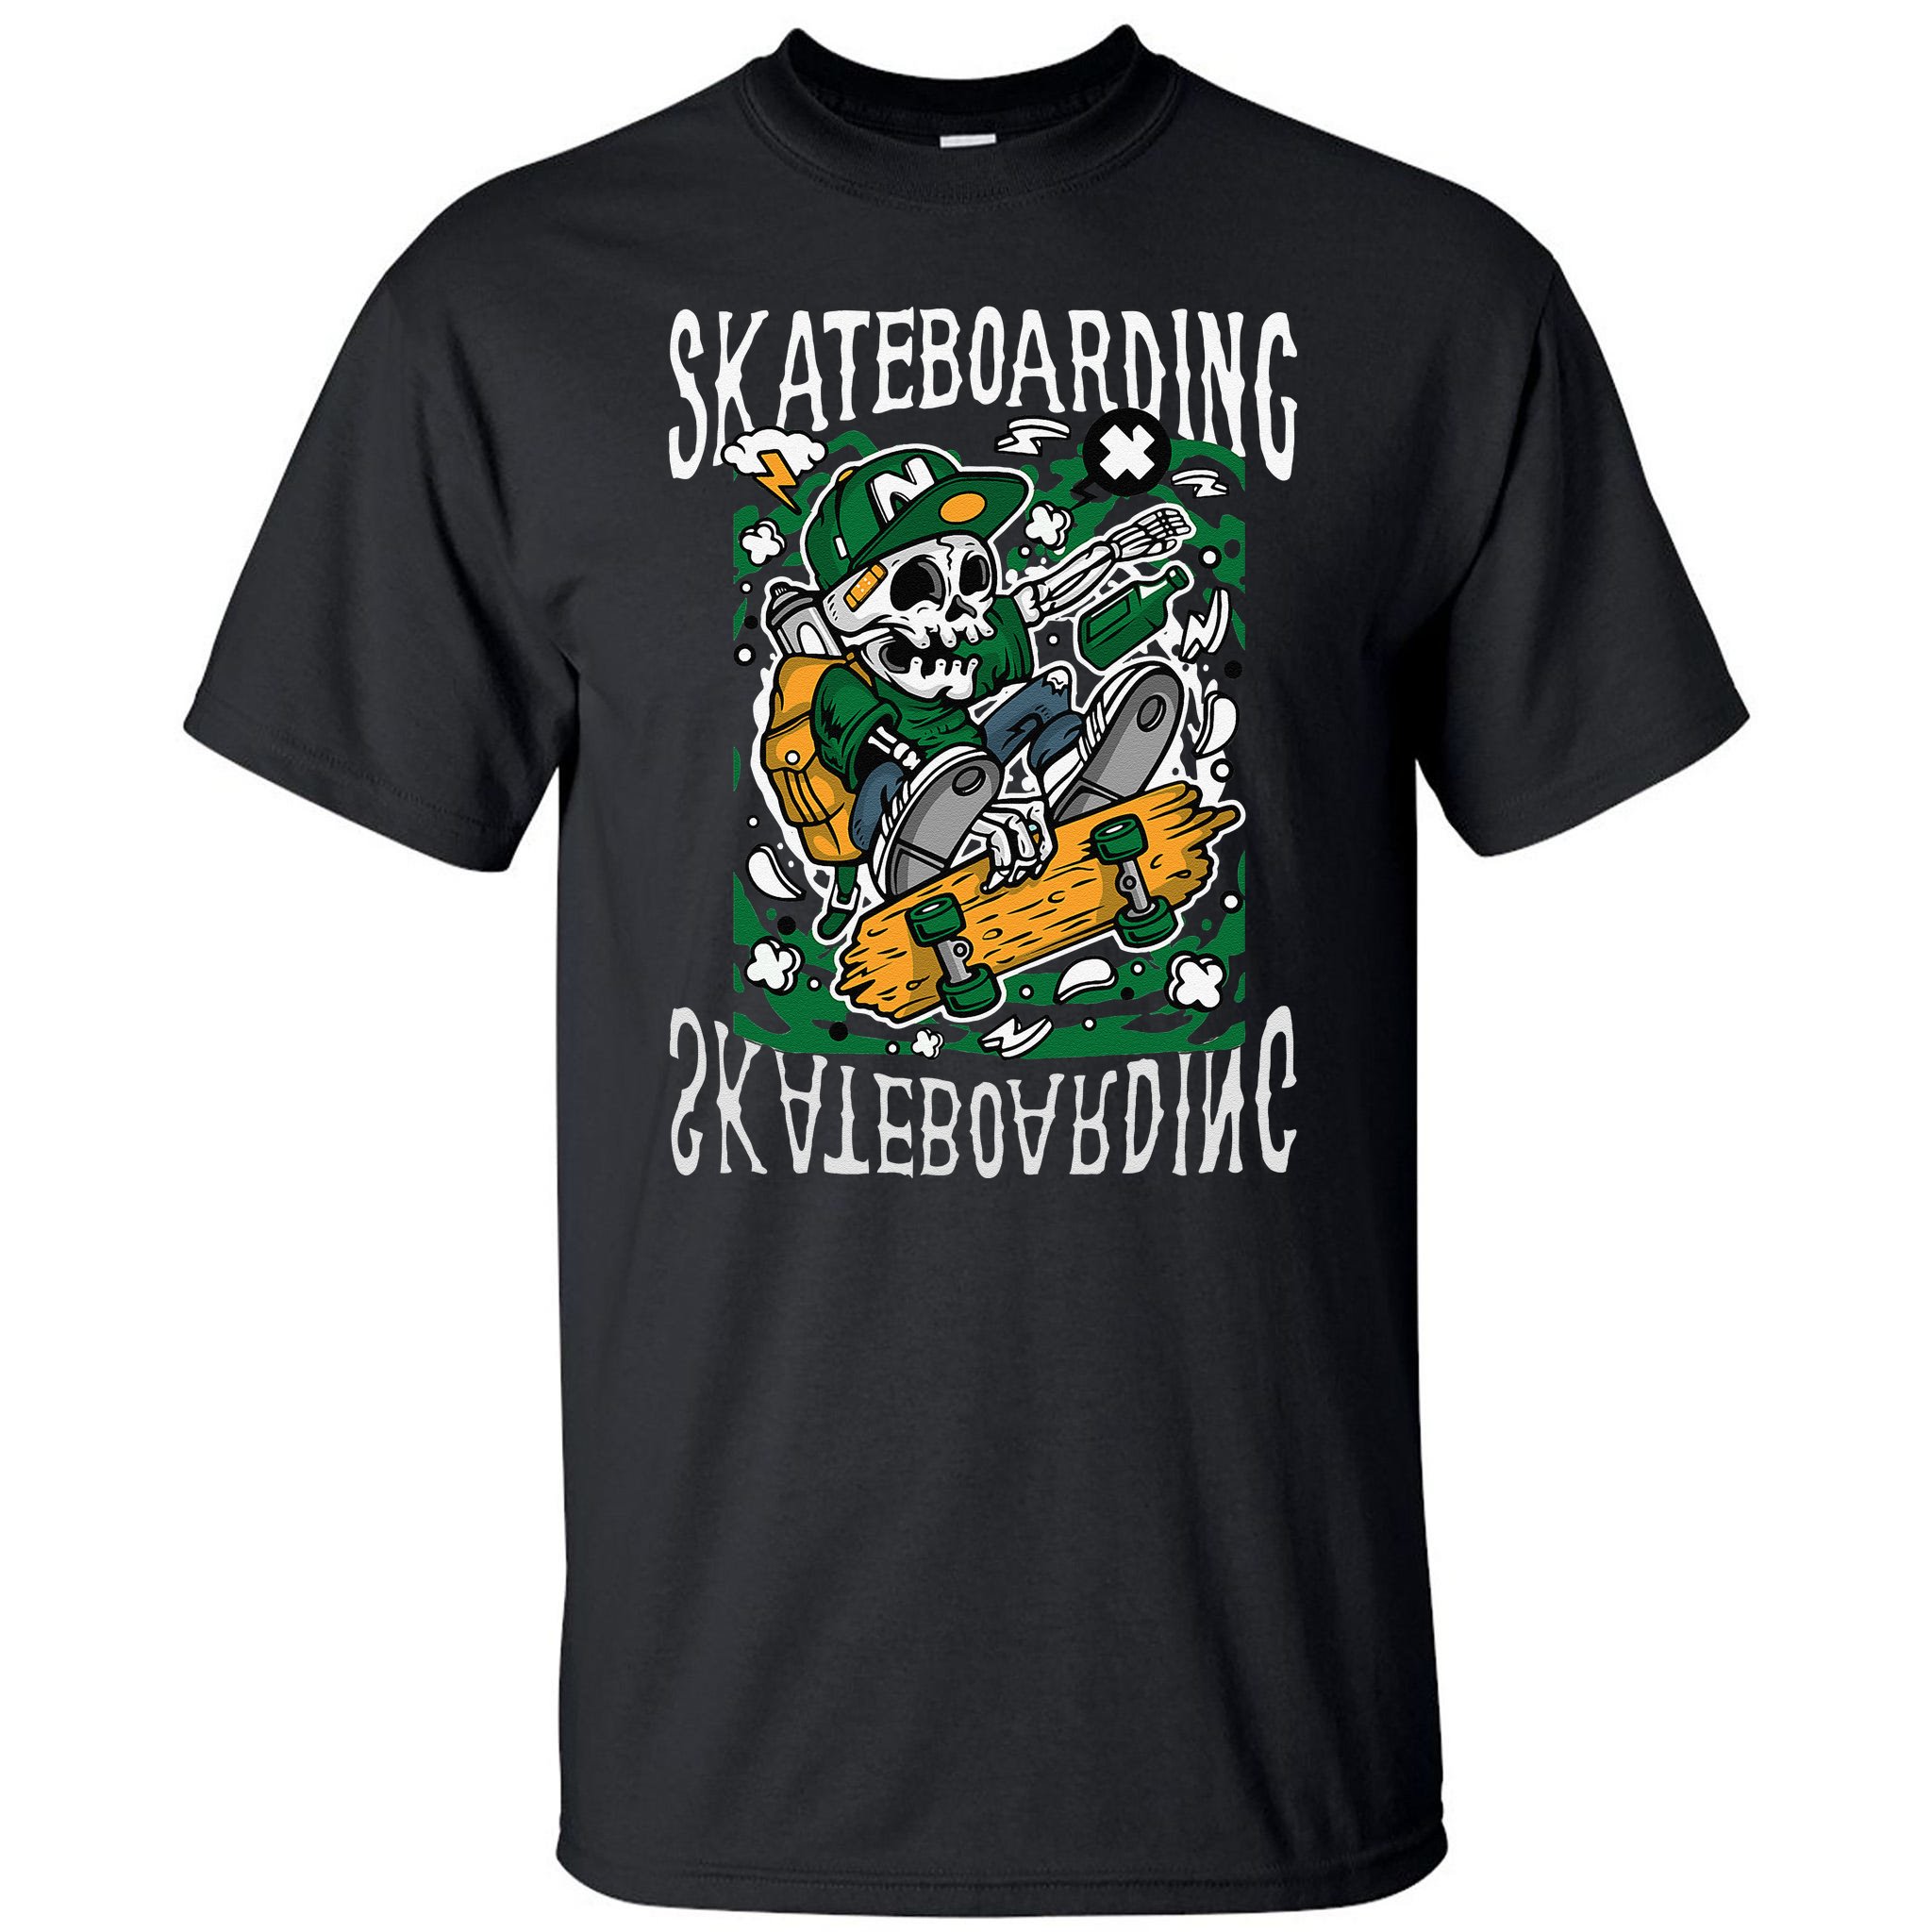 SkateBoarding Skull SkateBoard Santa Cruz Street Wear Tall T-Shirt